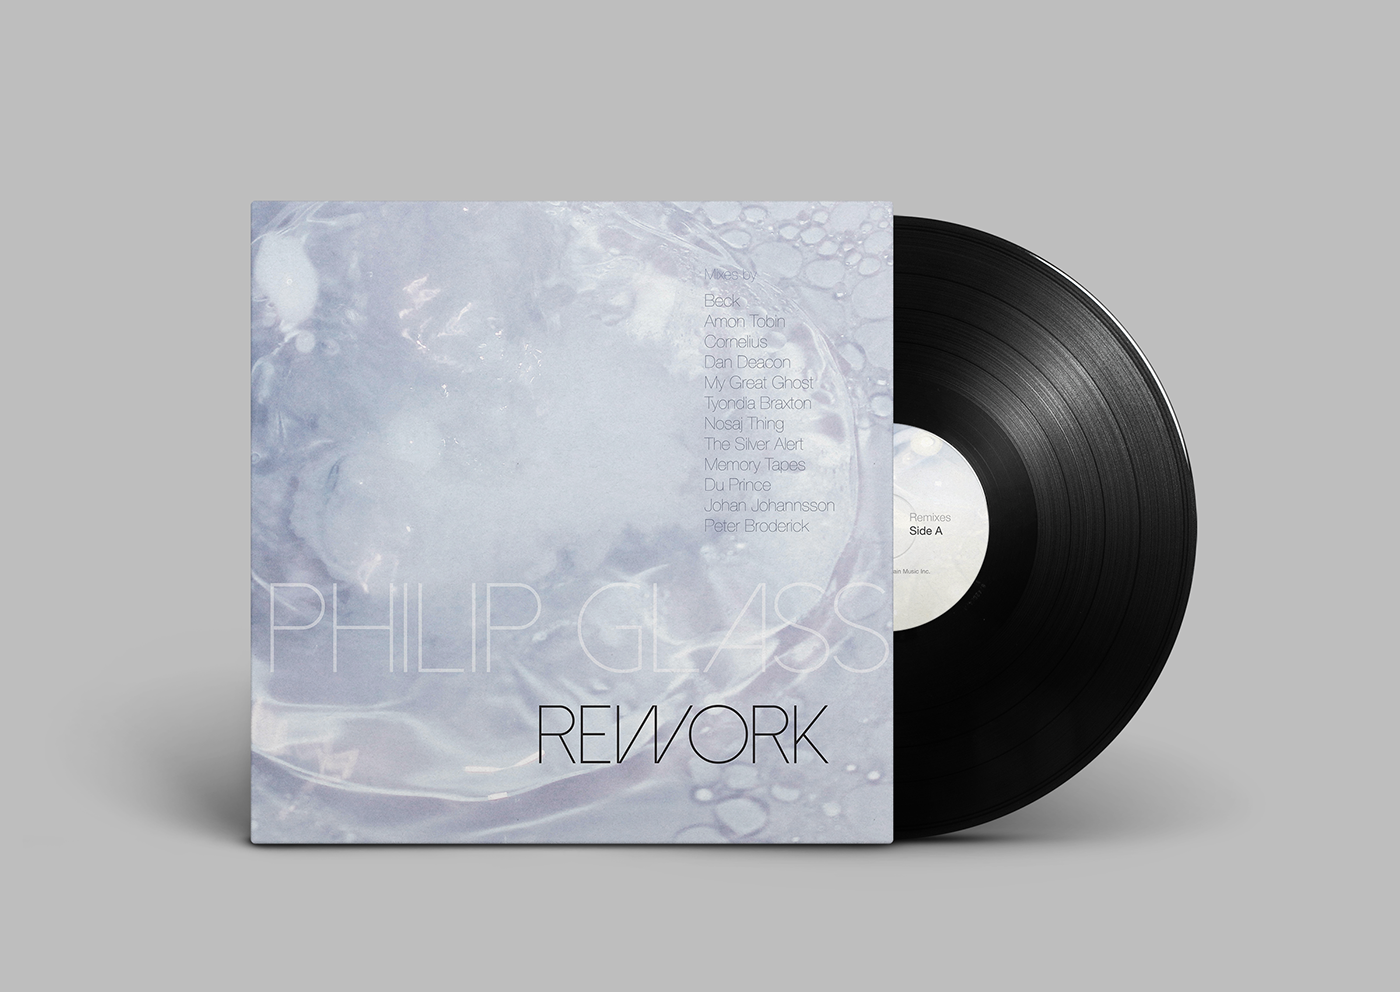 phillip glass disk vinyl cover sleeve opera SAIC package design record